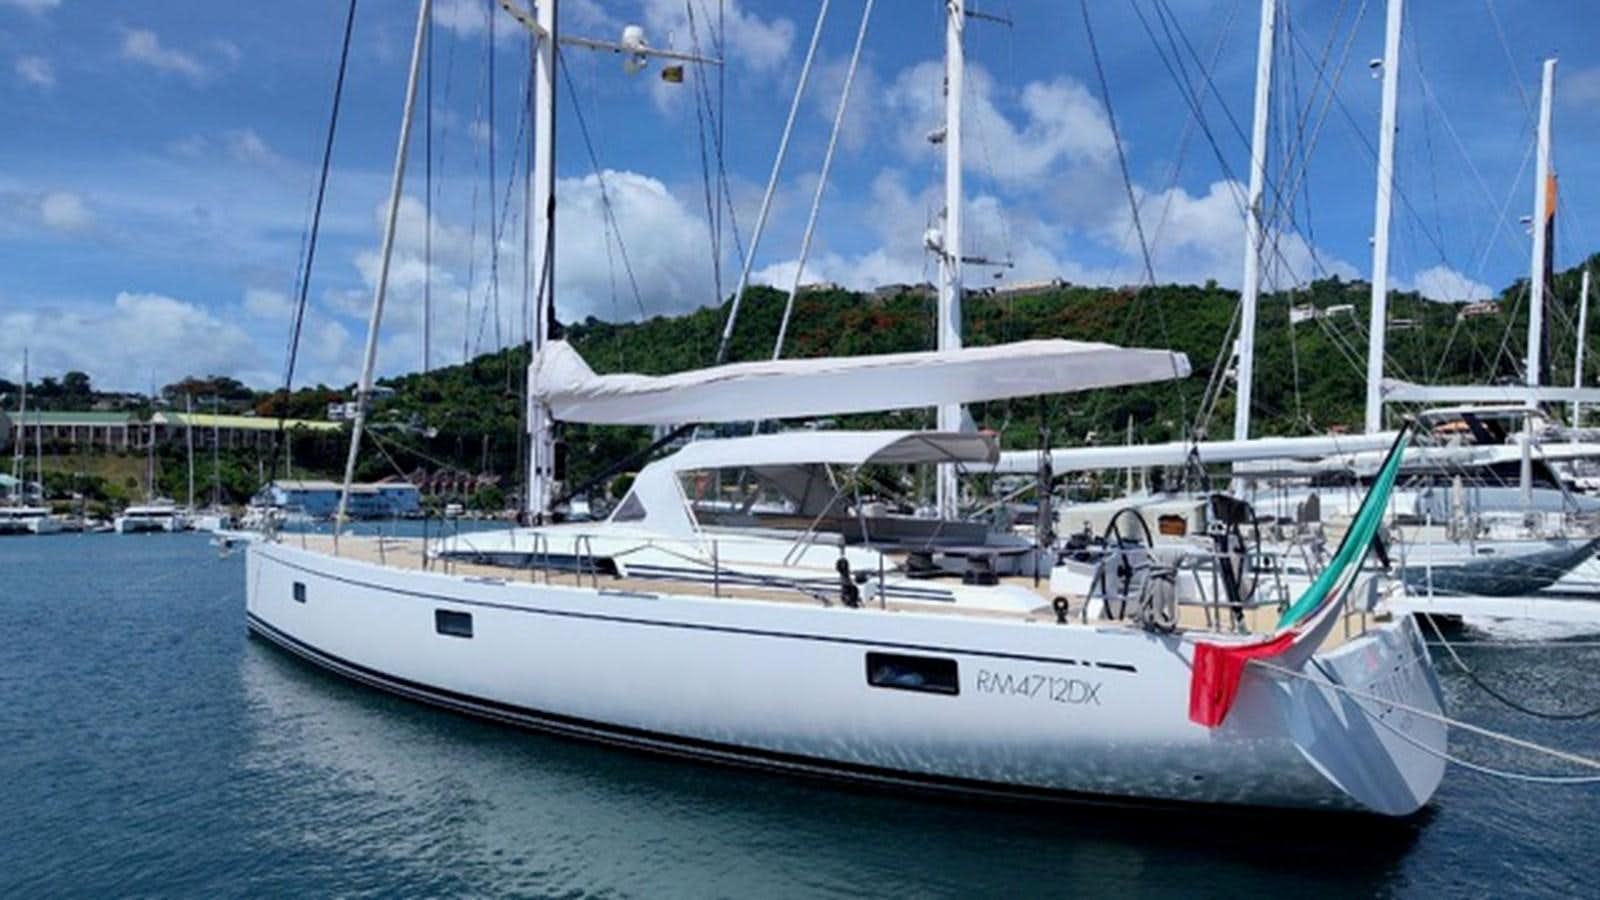 Sulita
Yacht for Sale